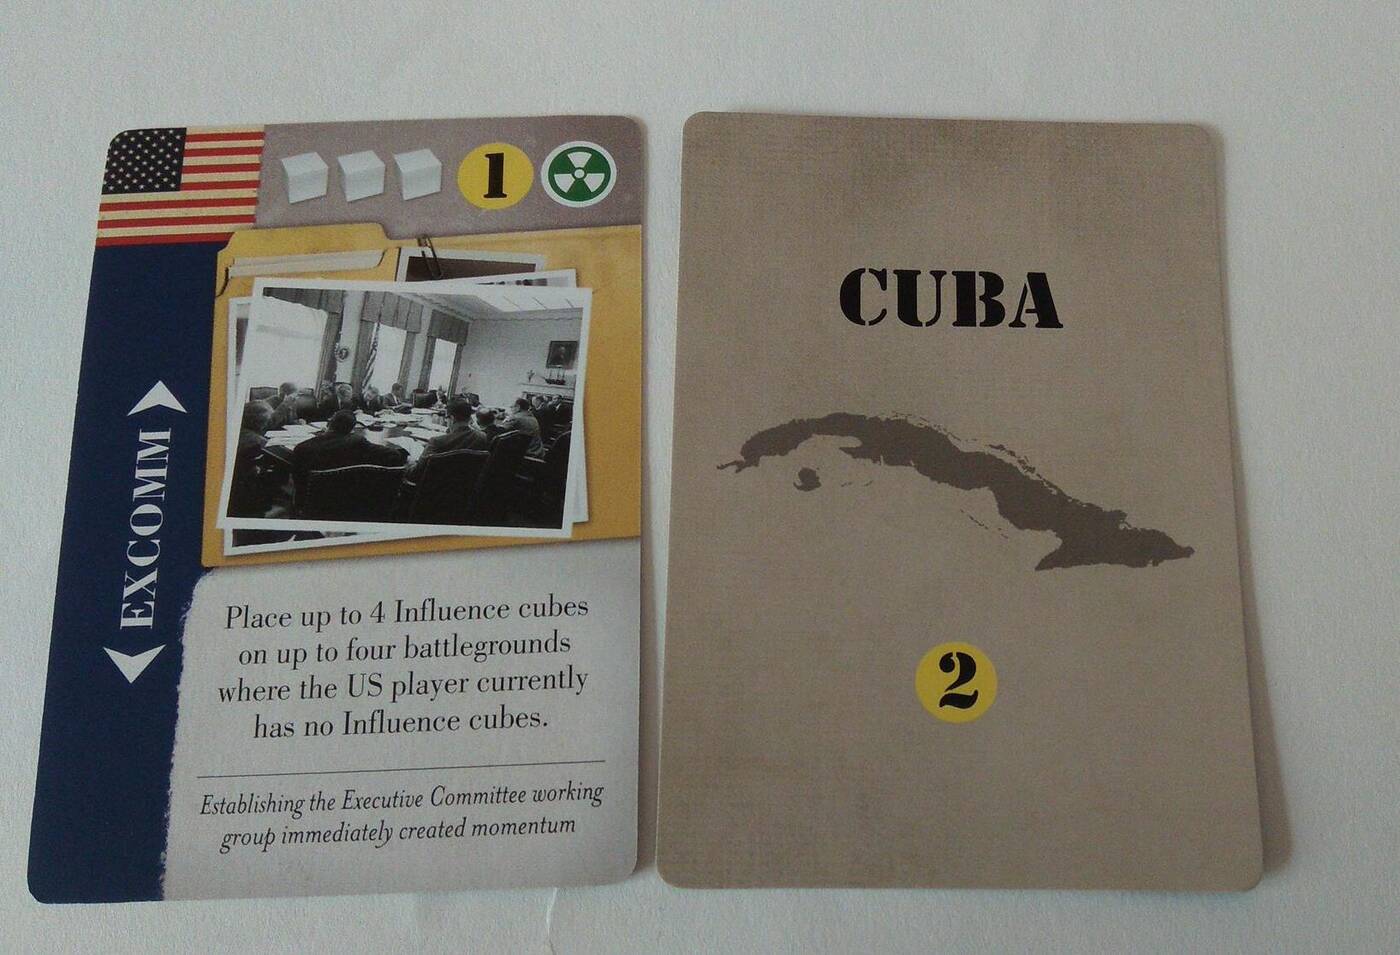 13 minutes: The Cuban Missile Crisis